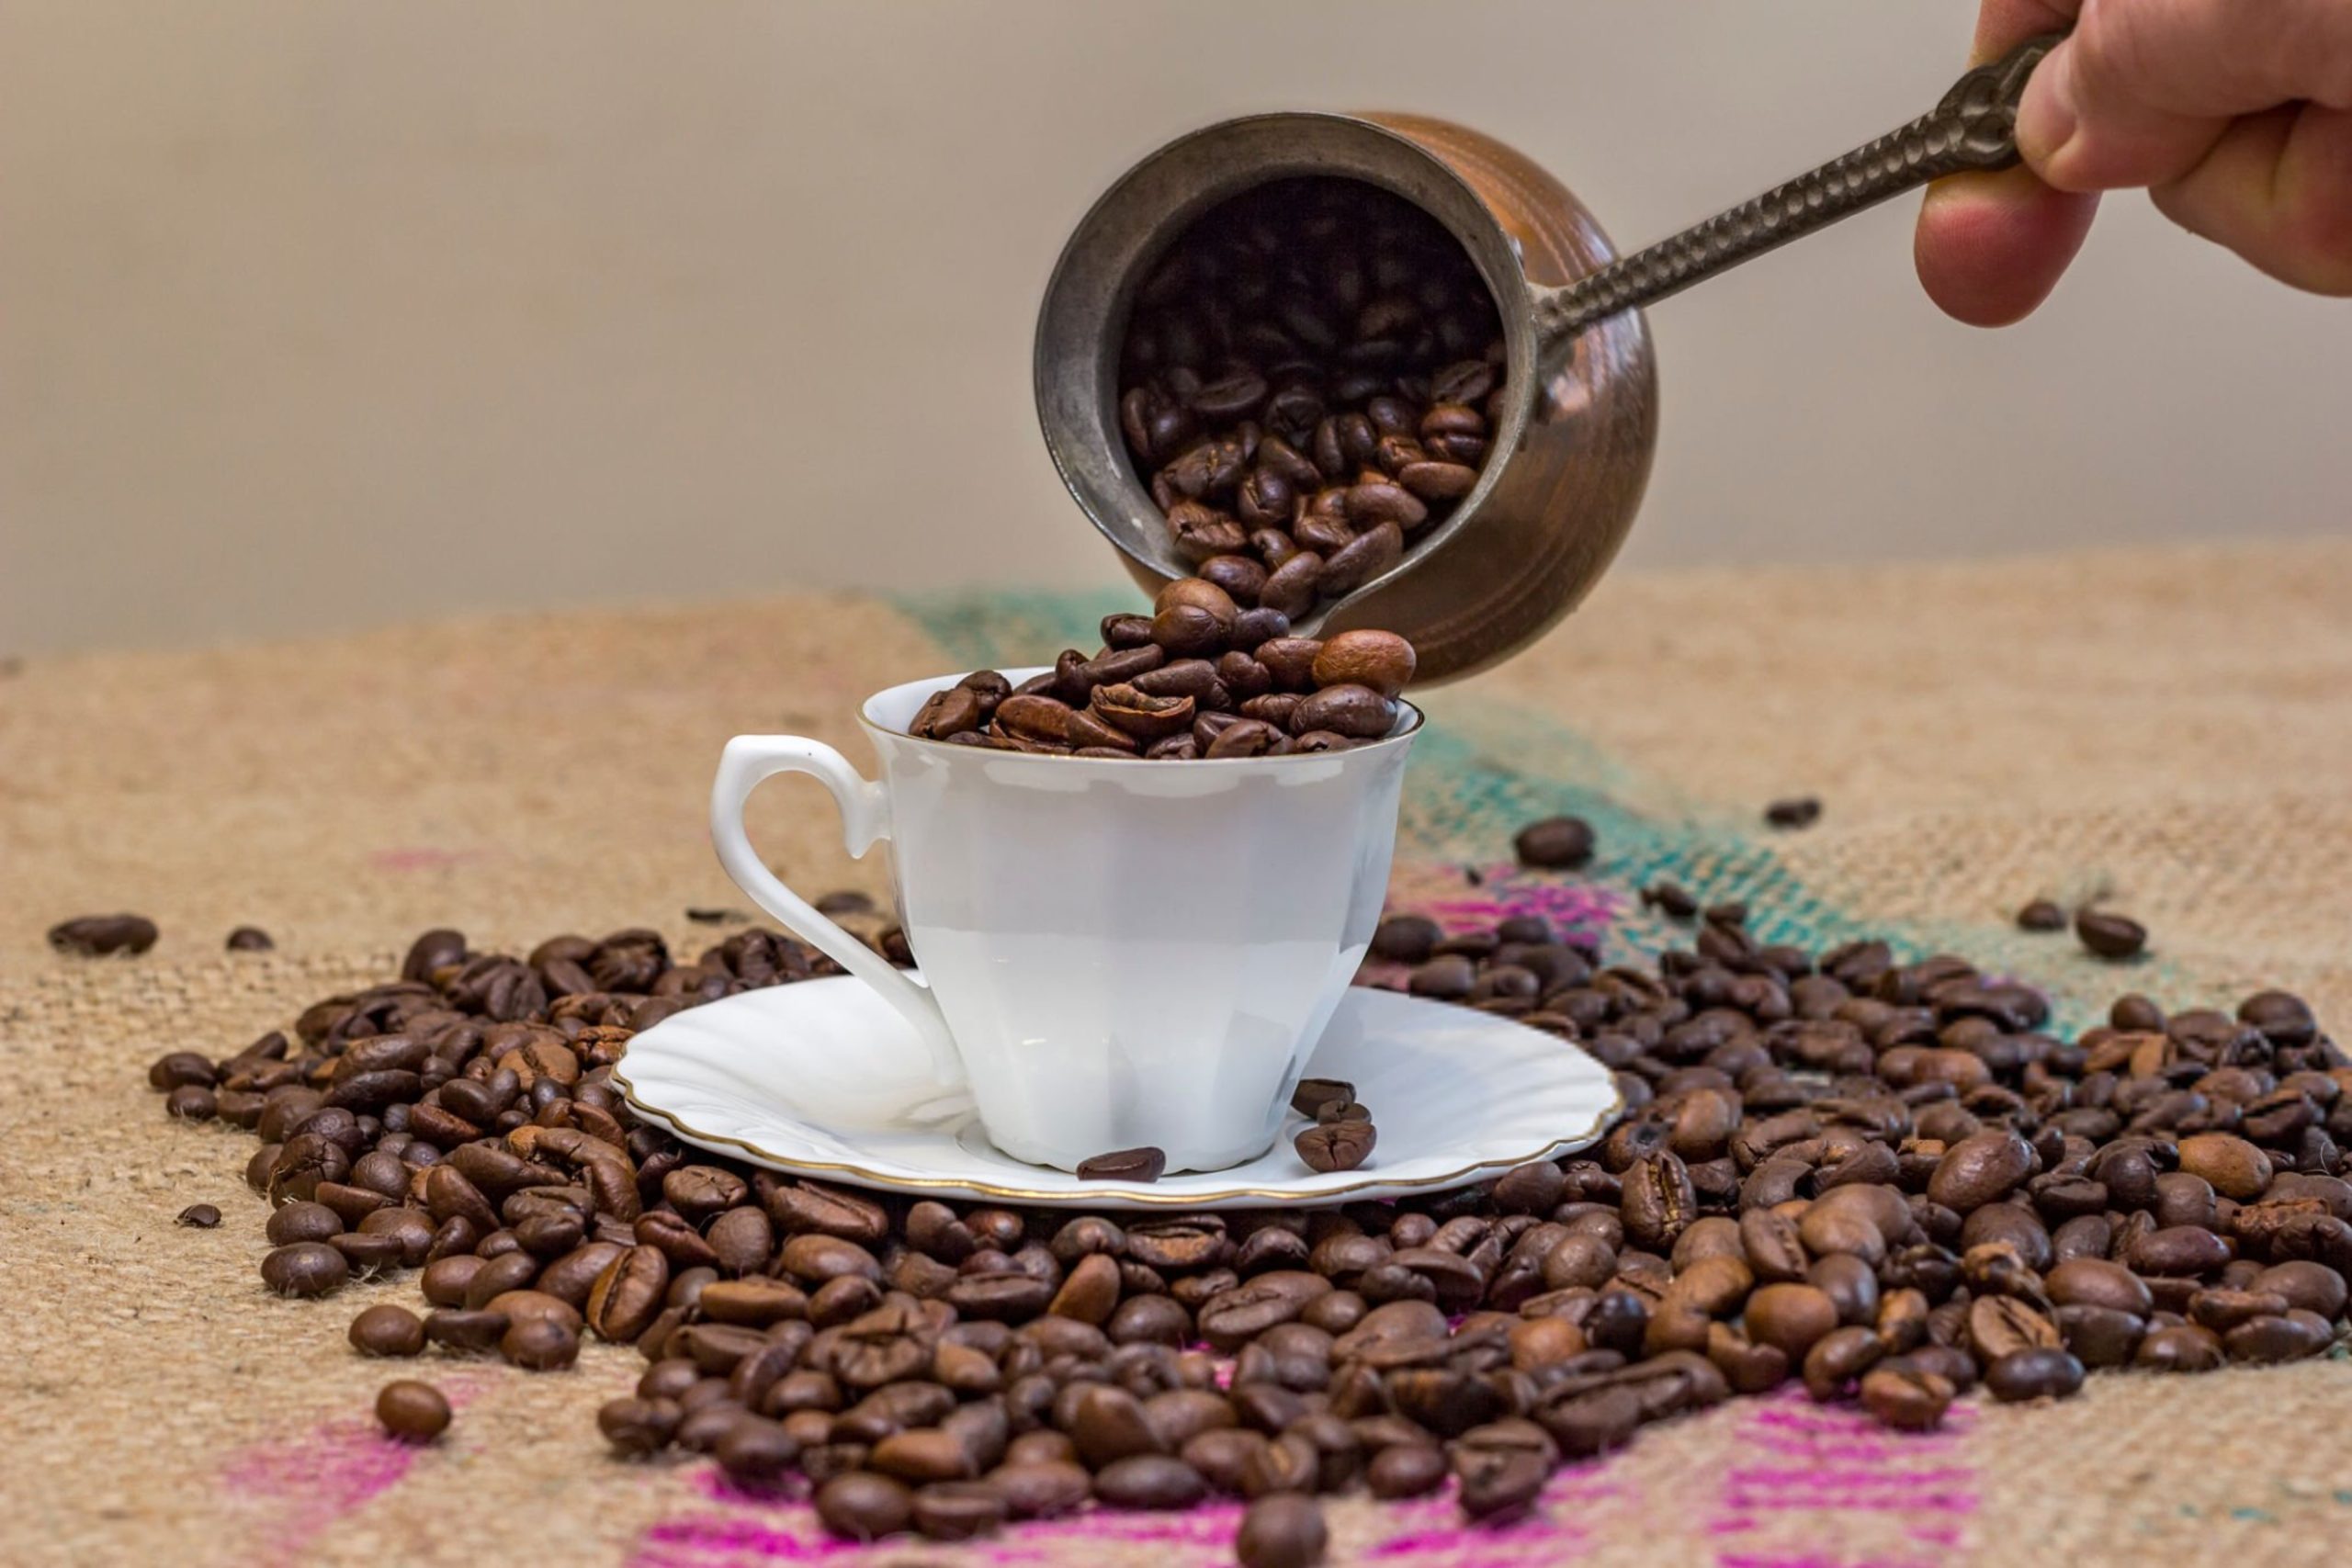 خرید قهوه اتیوپی